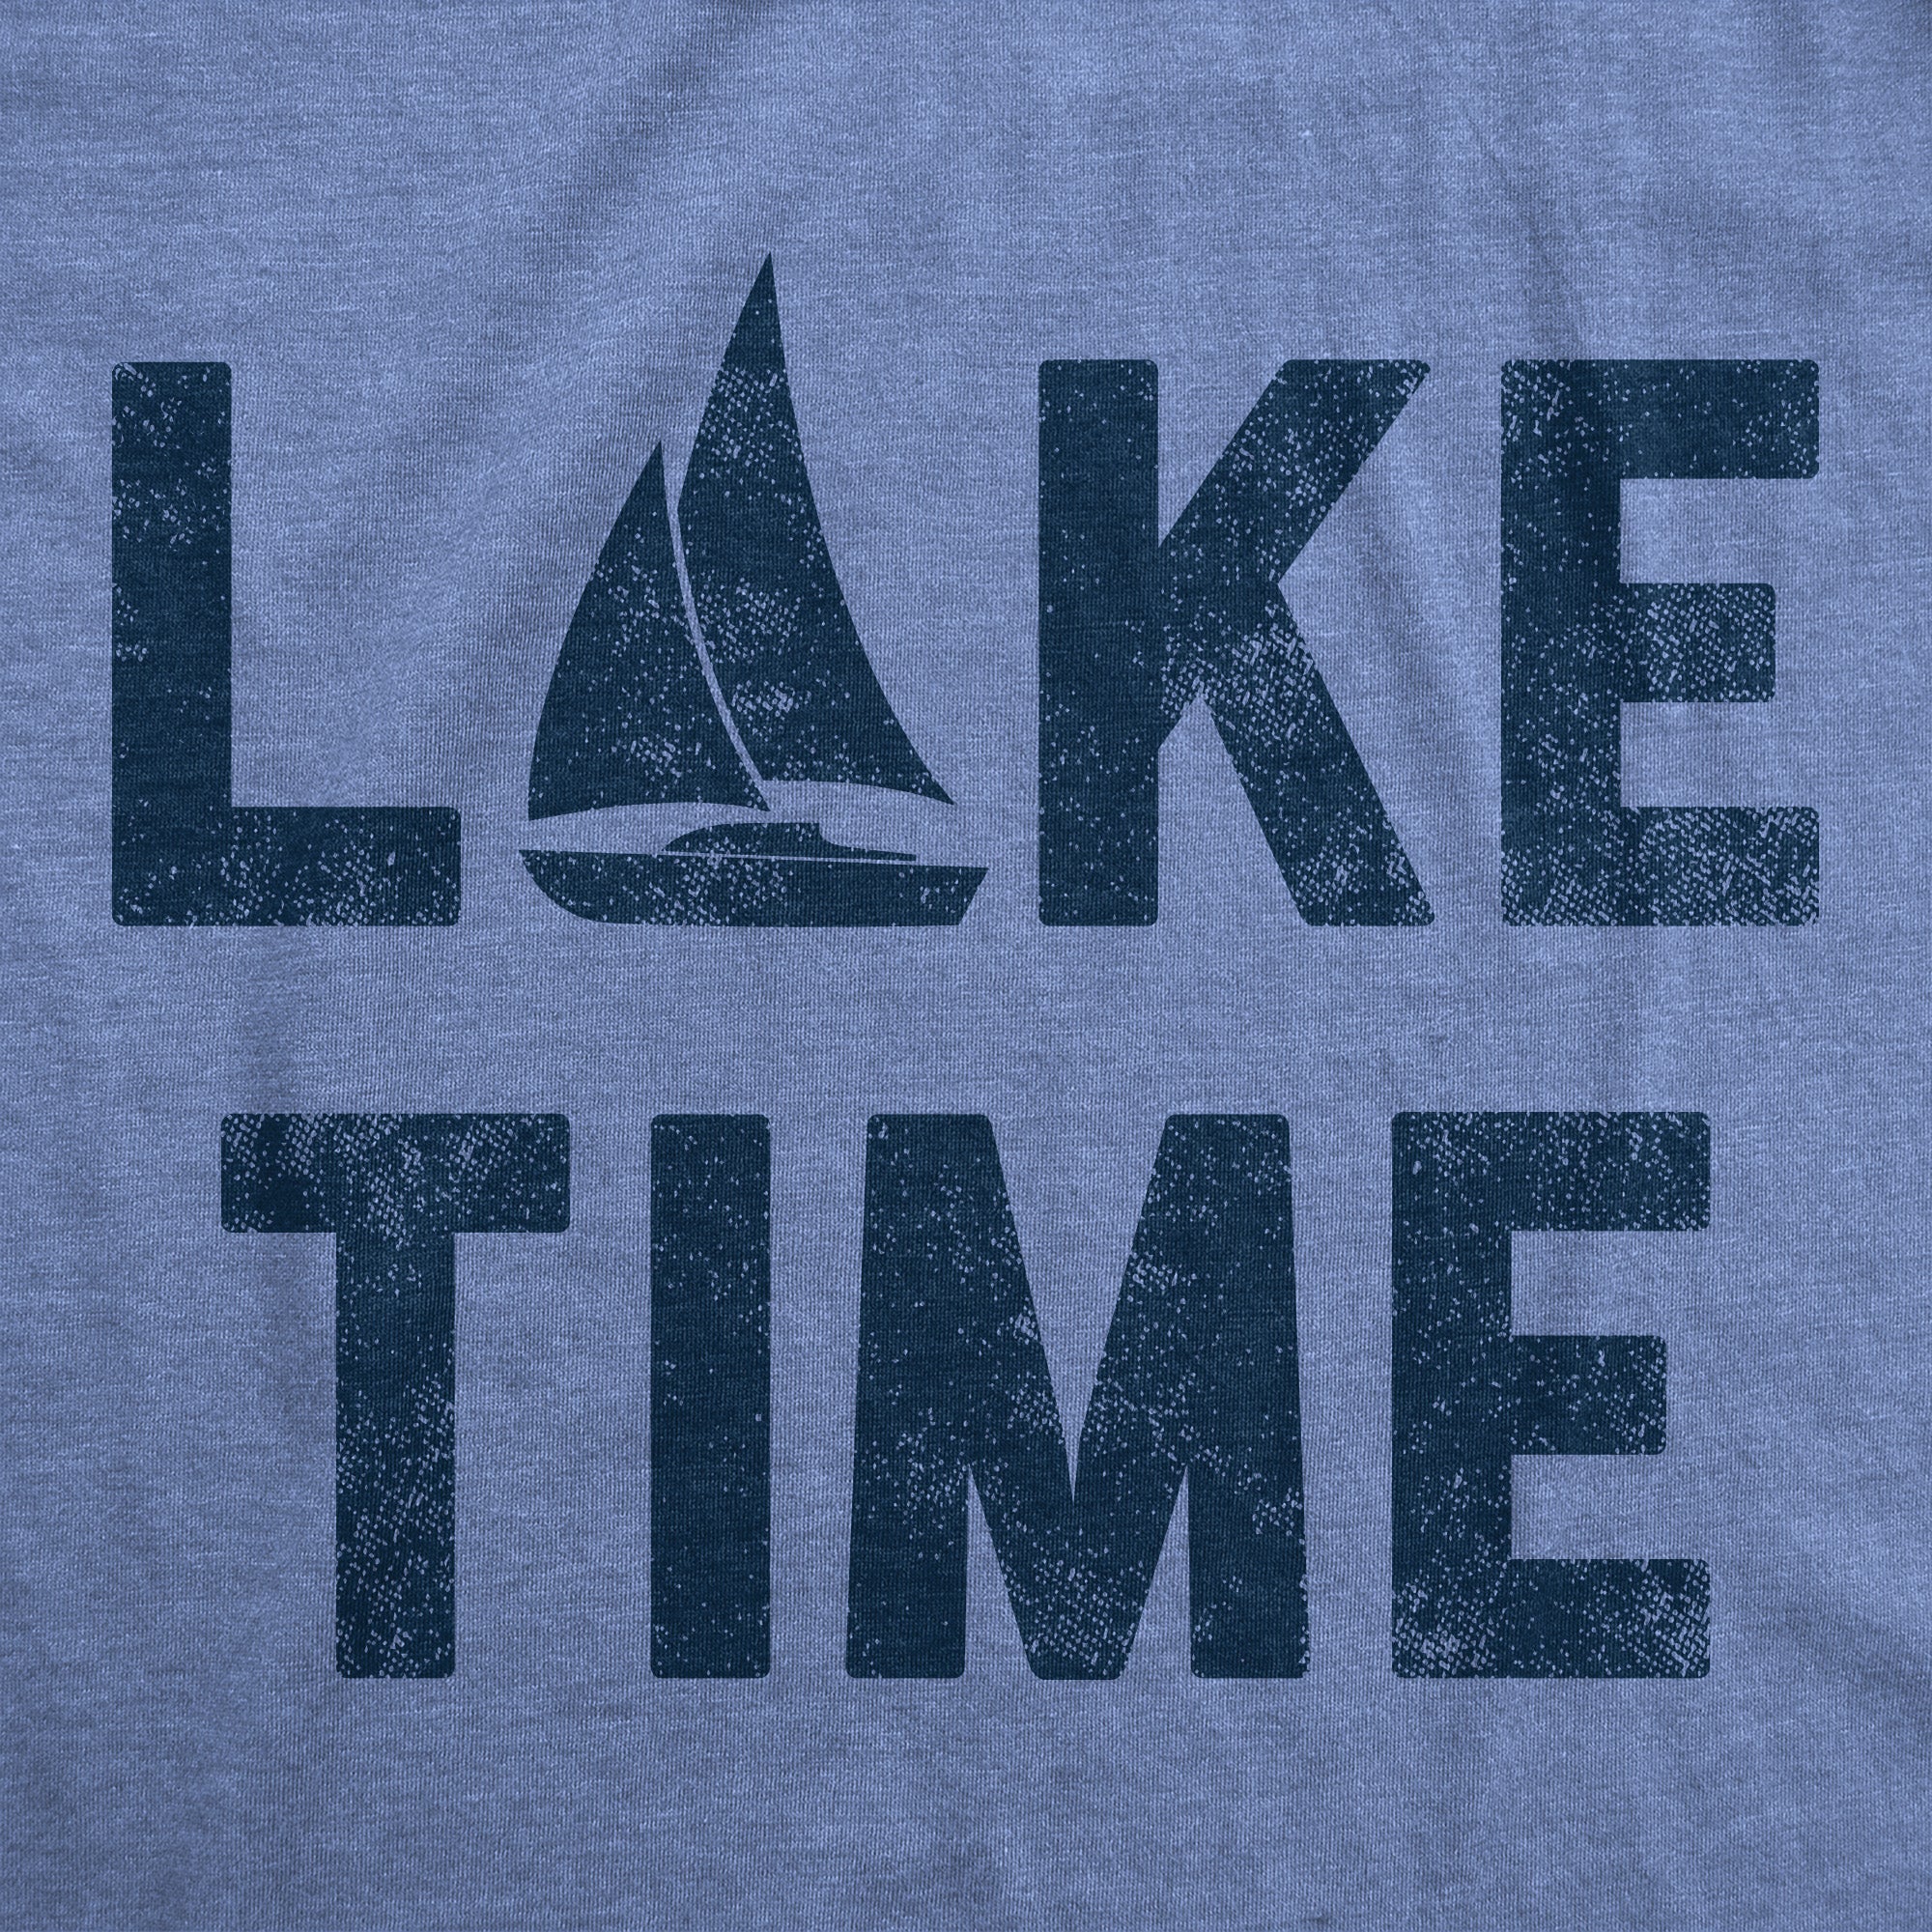 Funny Light Heather Blue - LAKE Lake Time Mens T Shirt Nerdy Vacation Tee